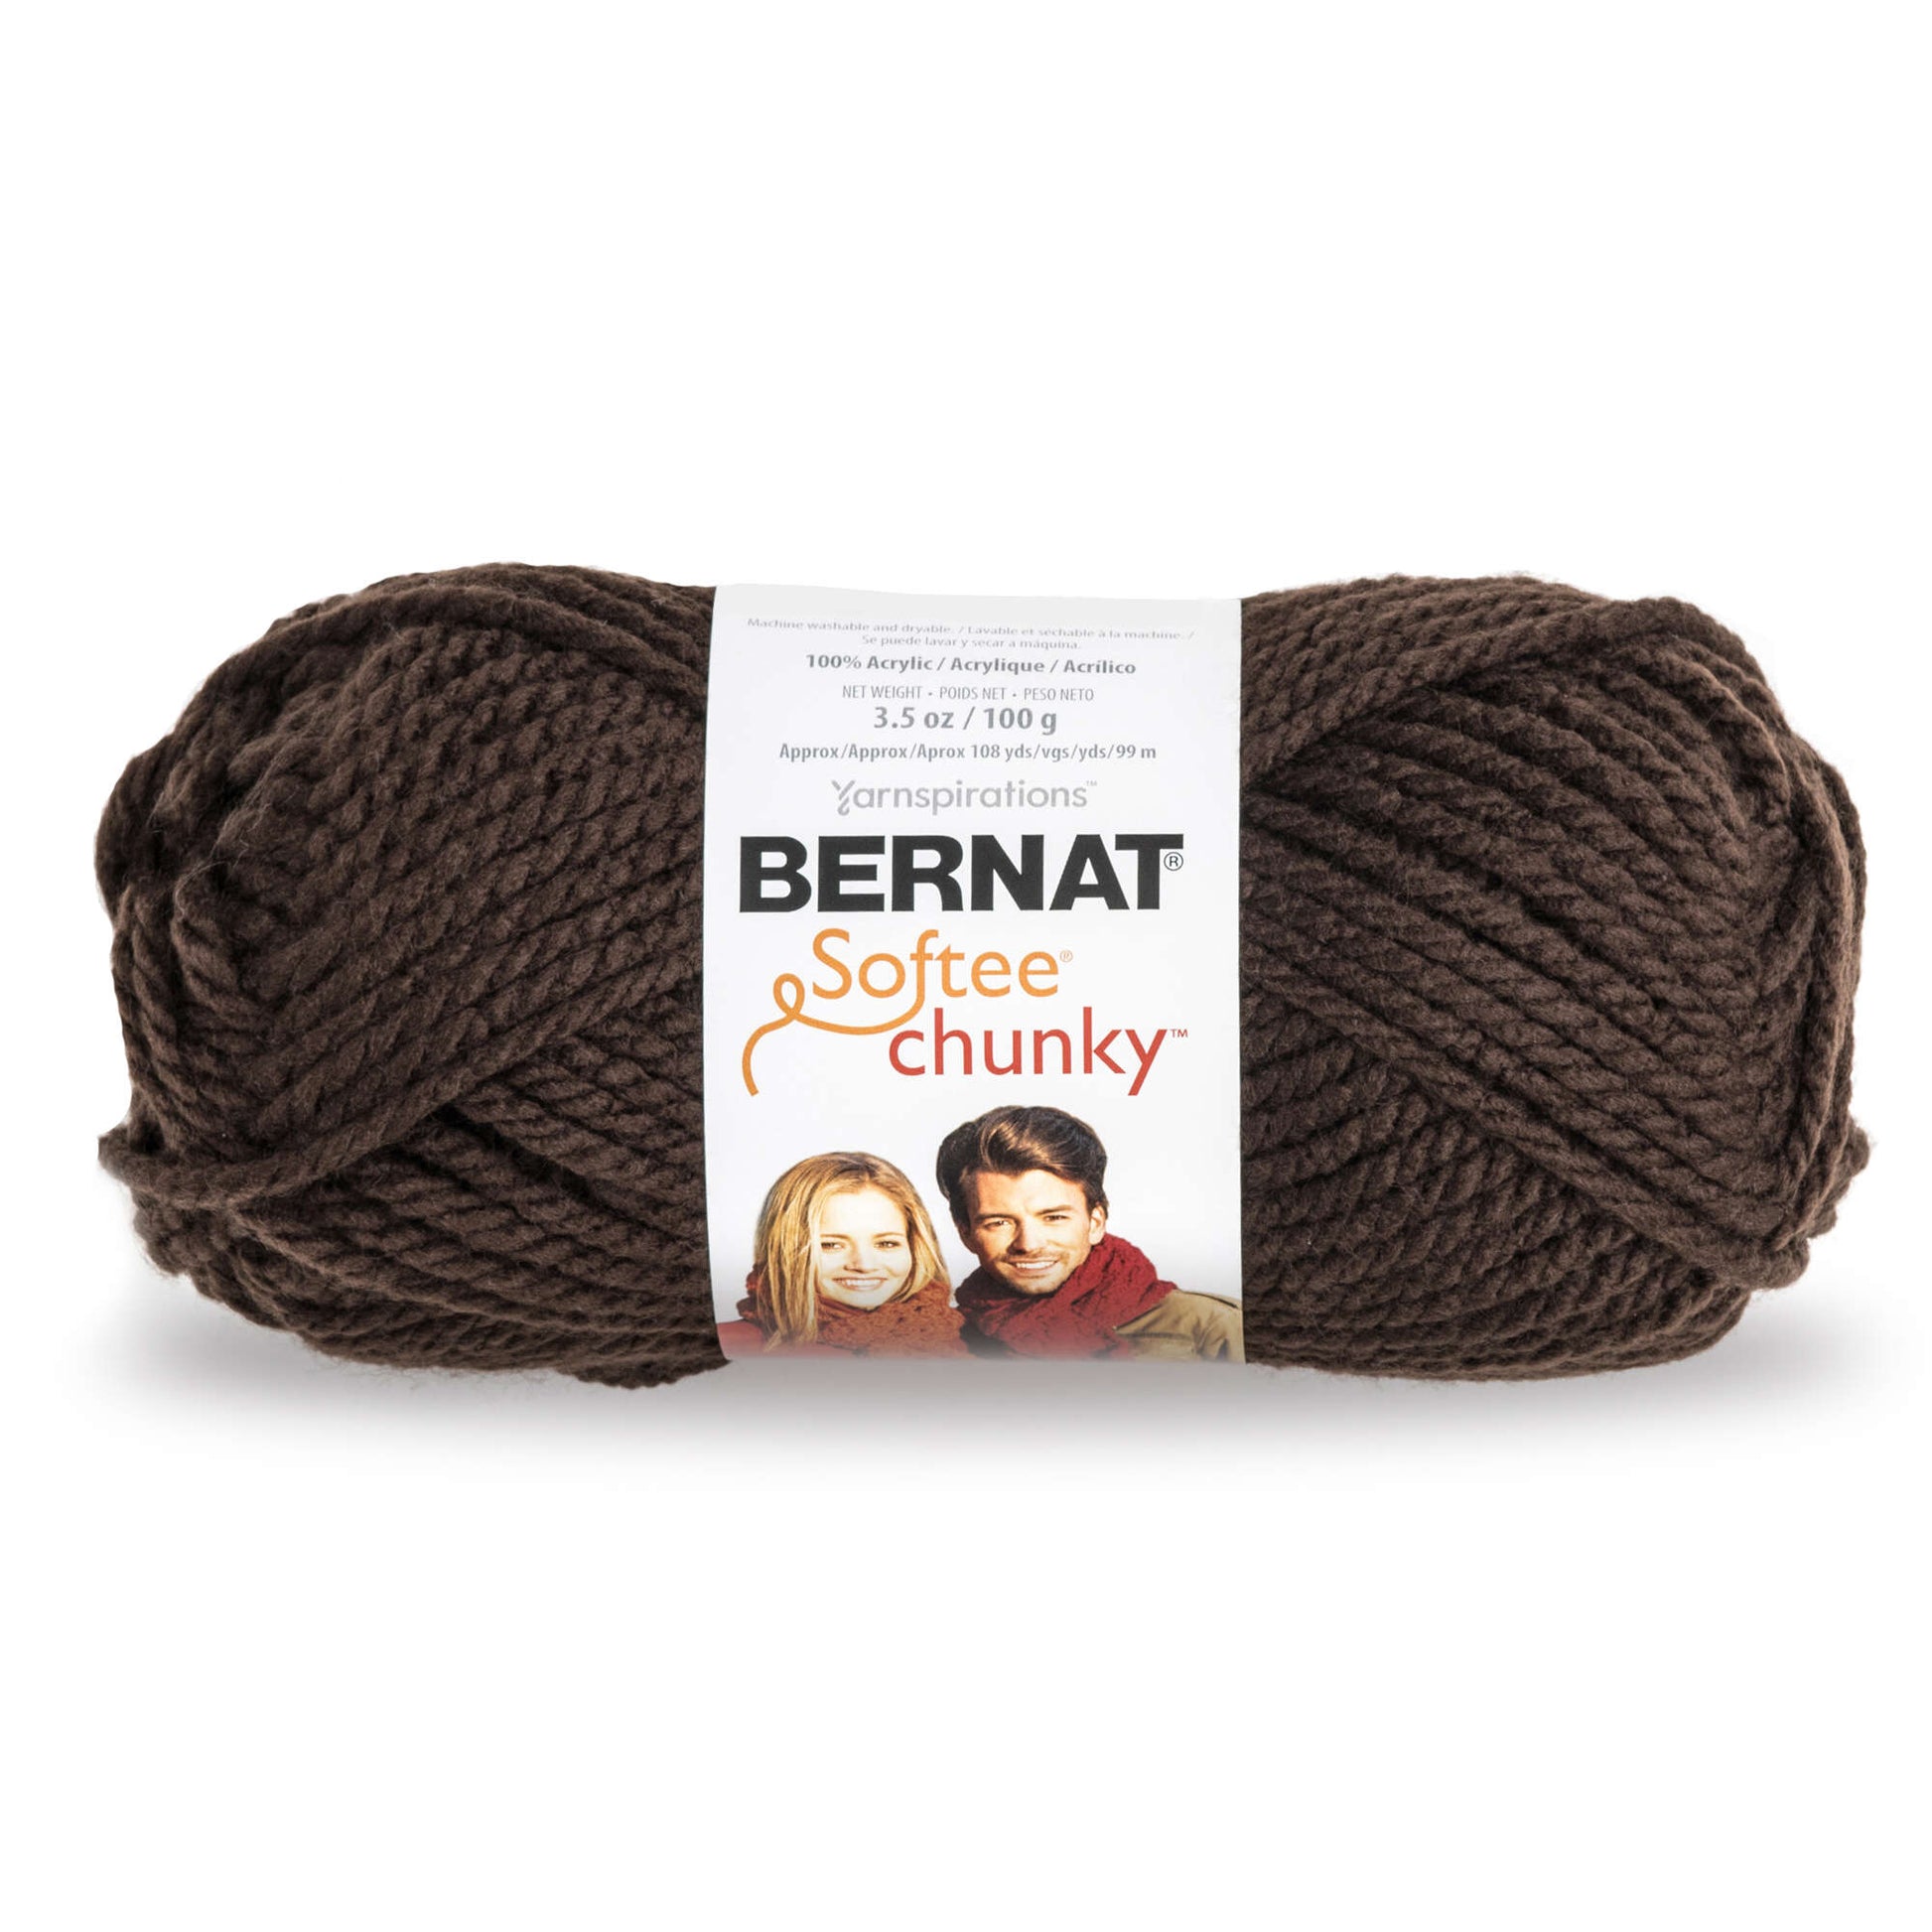 Bernat Softee Cotton Yarn